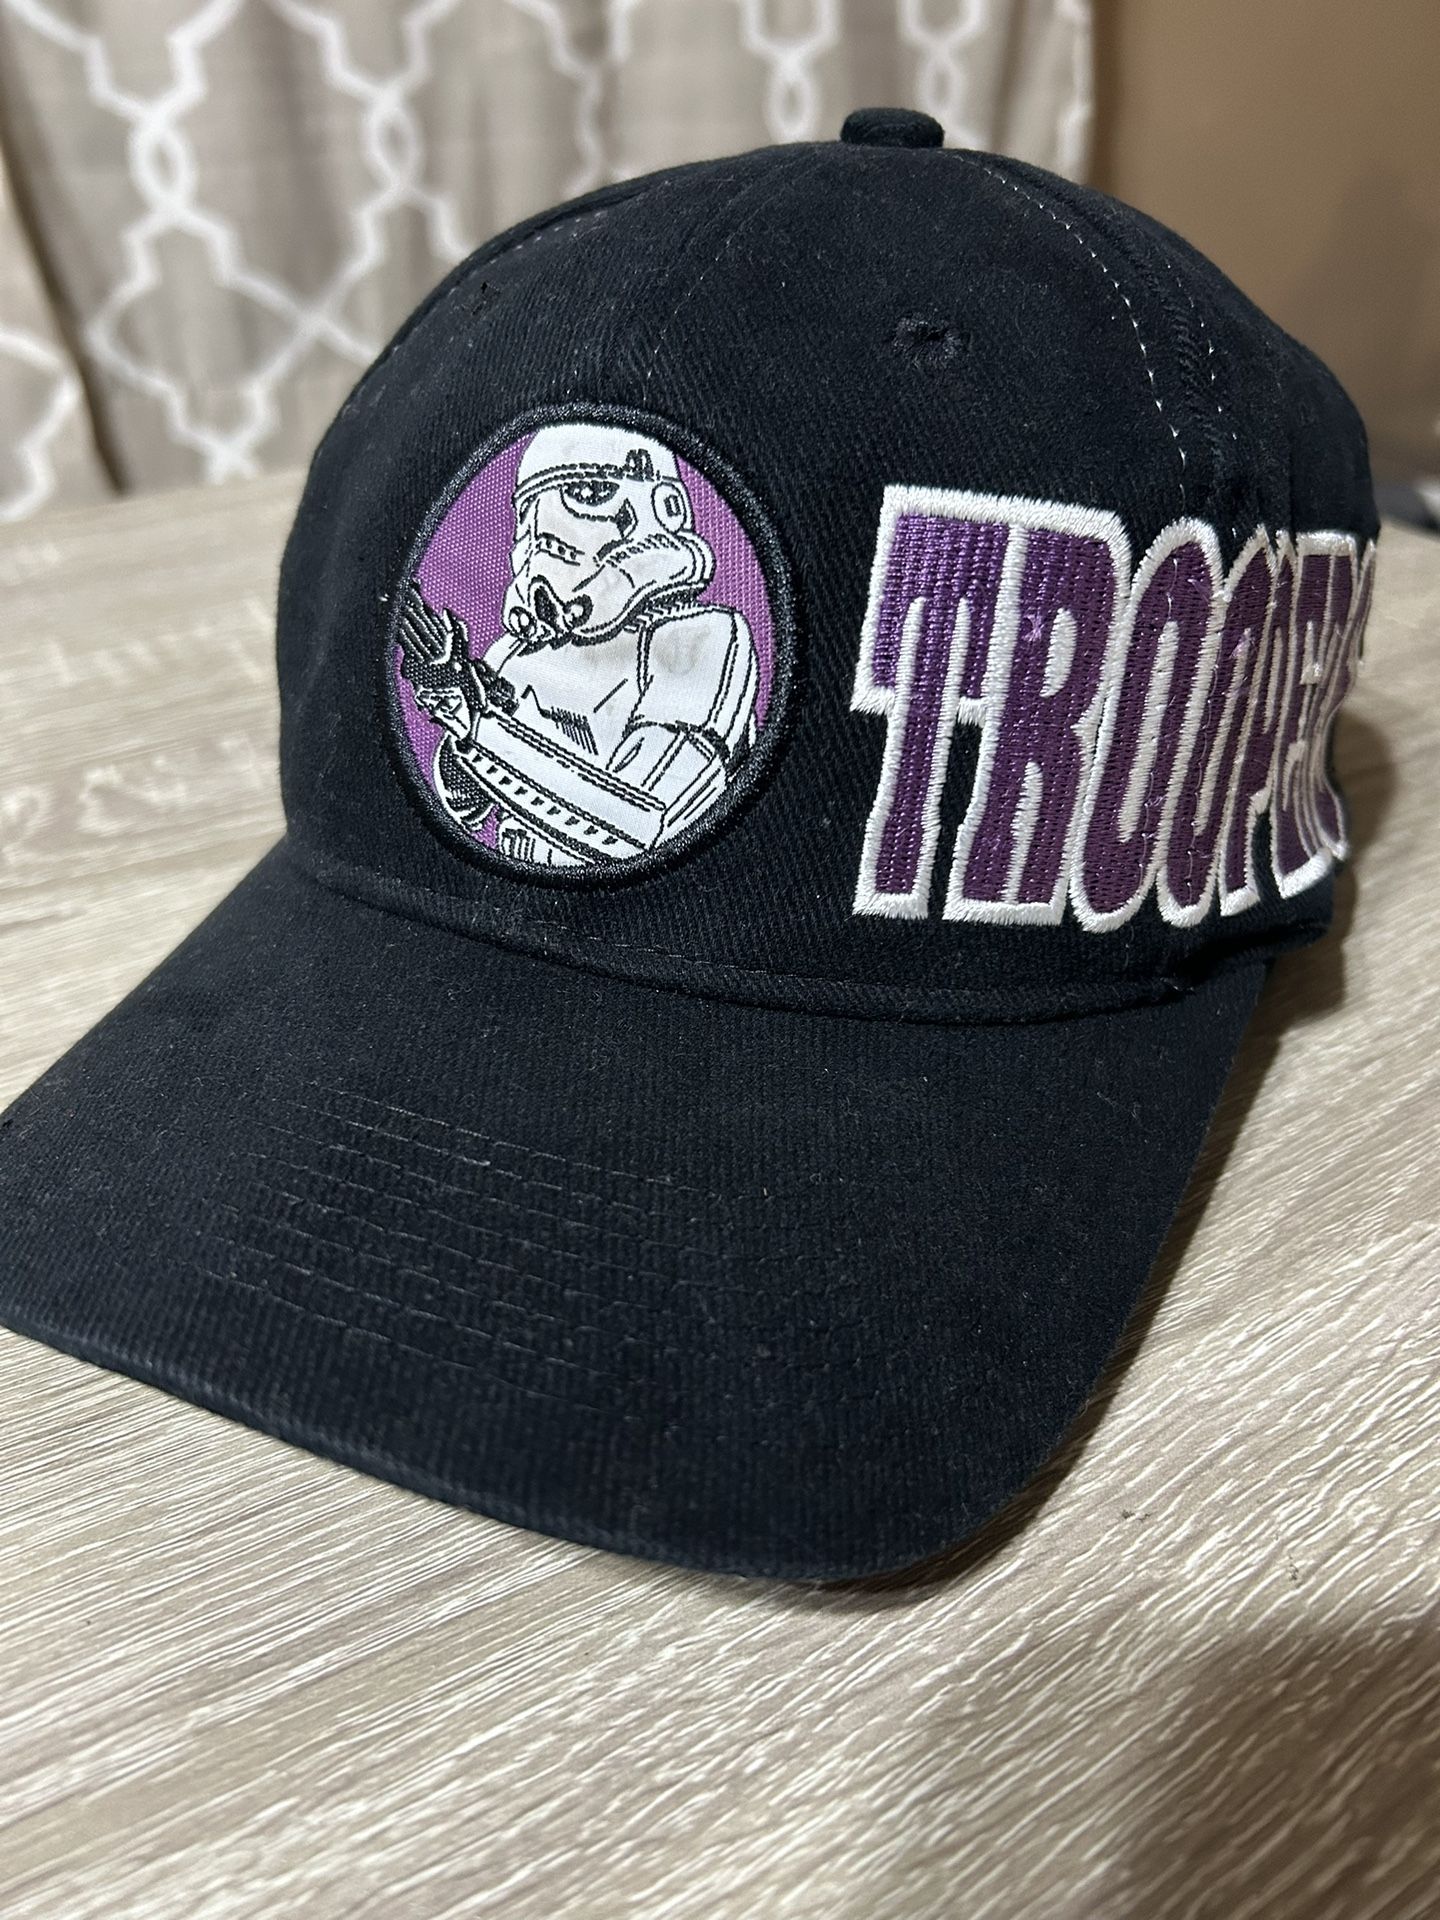 Vintage Star Wars Hat